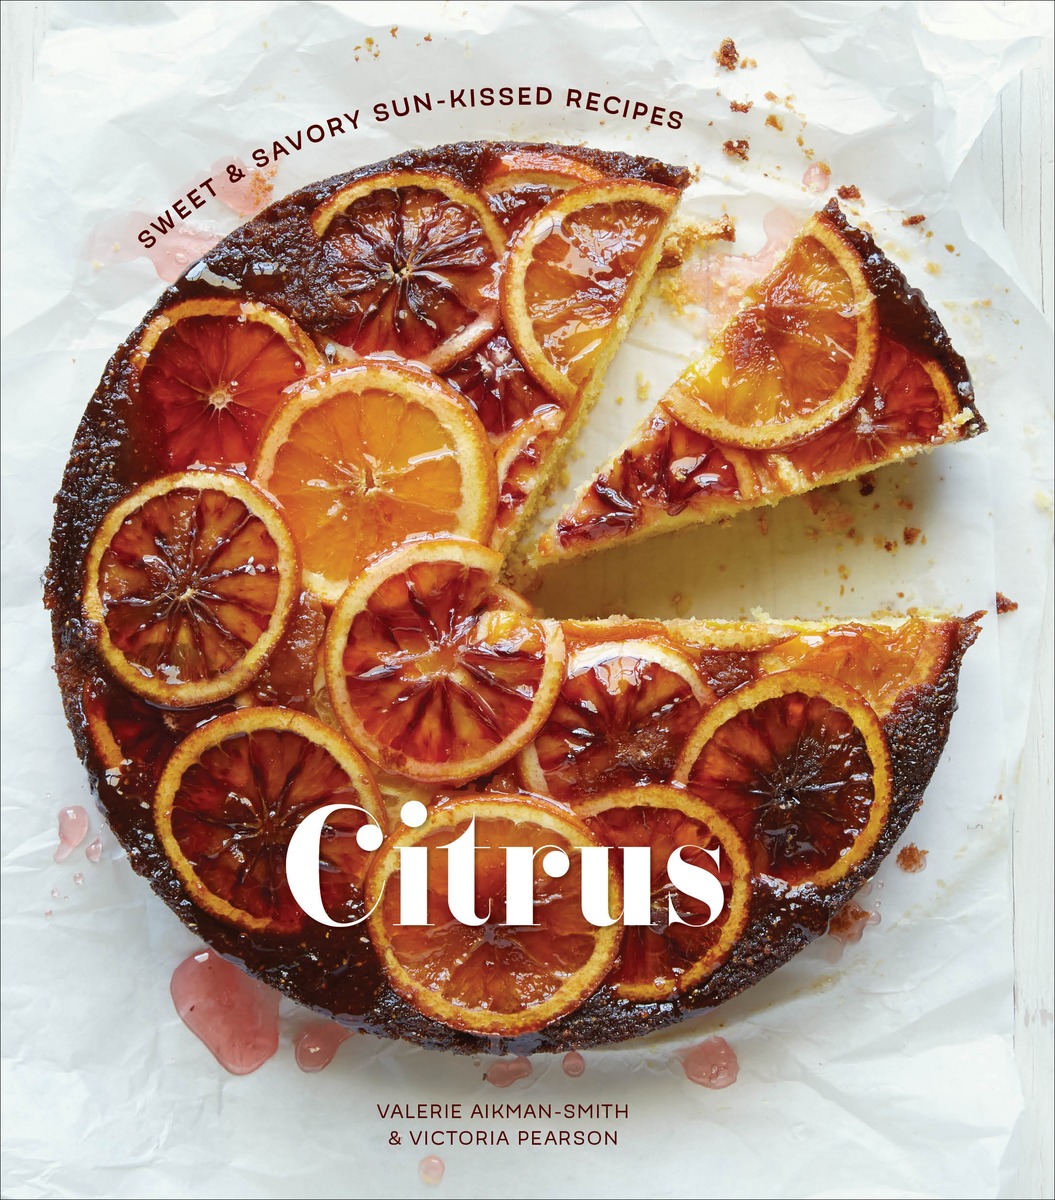 Citrus: Sweet&Savory Sun-Kissed Recipes